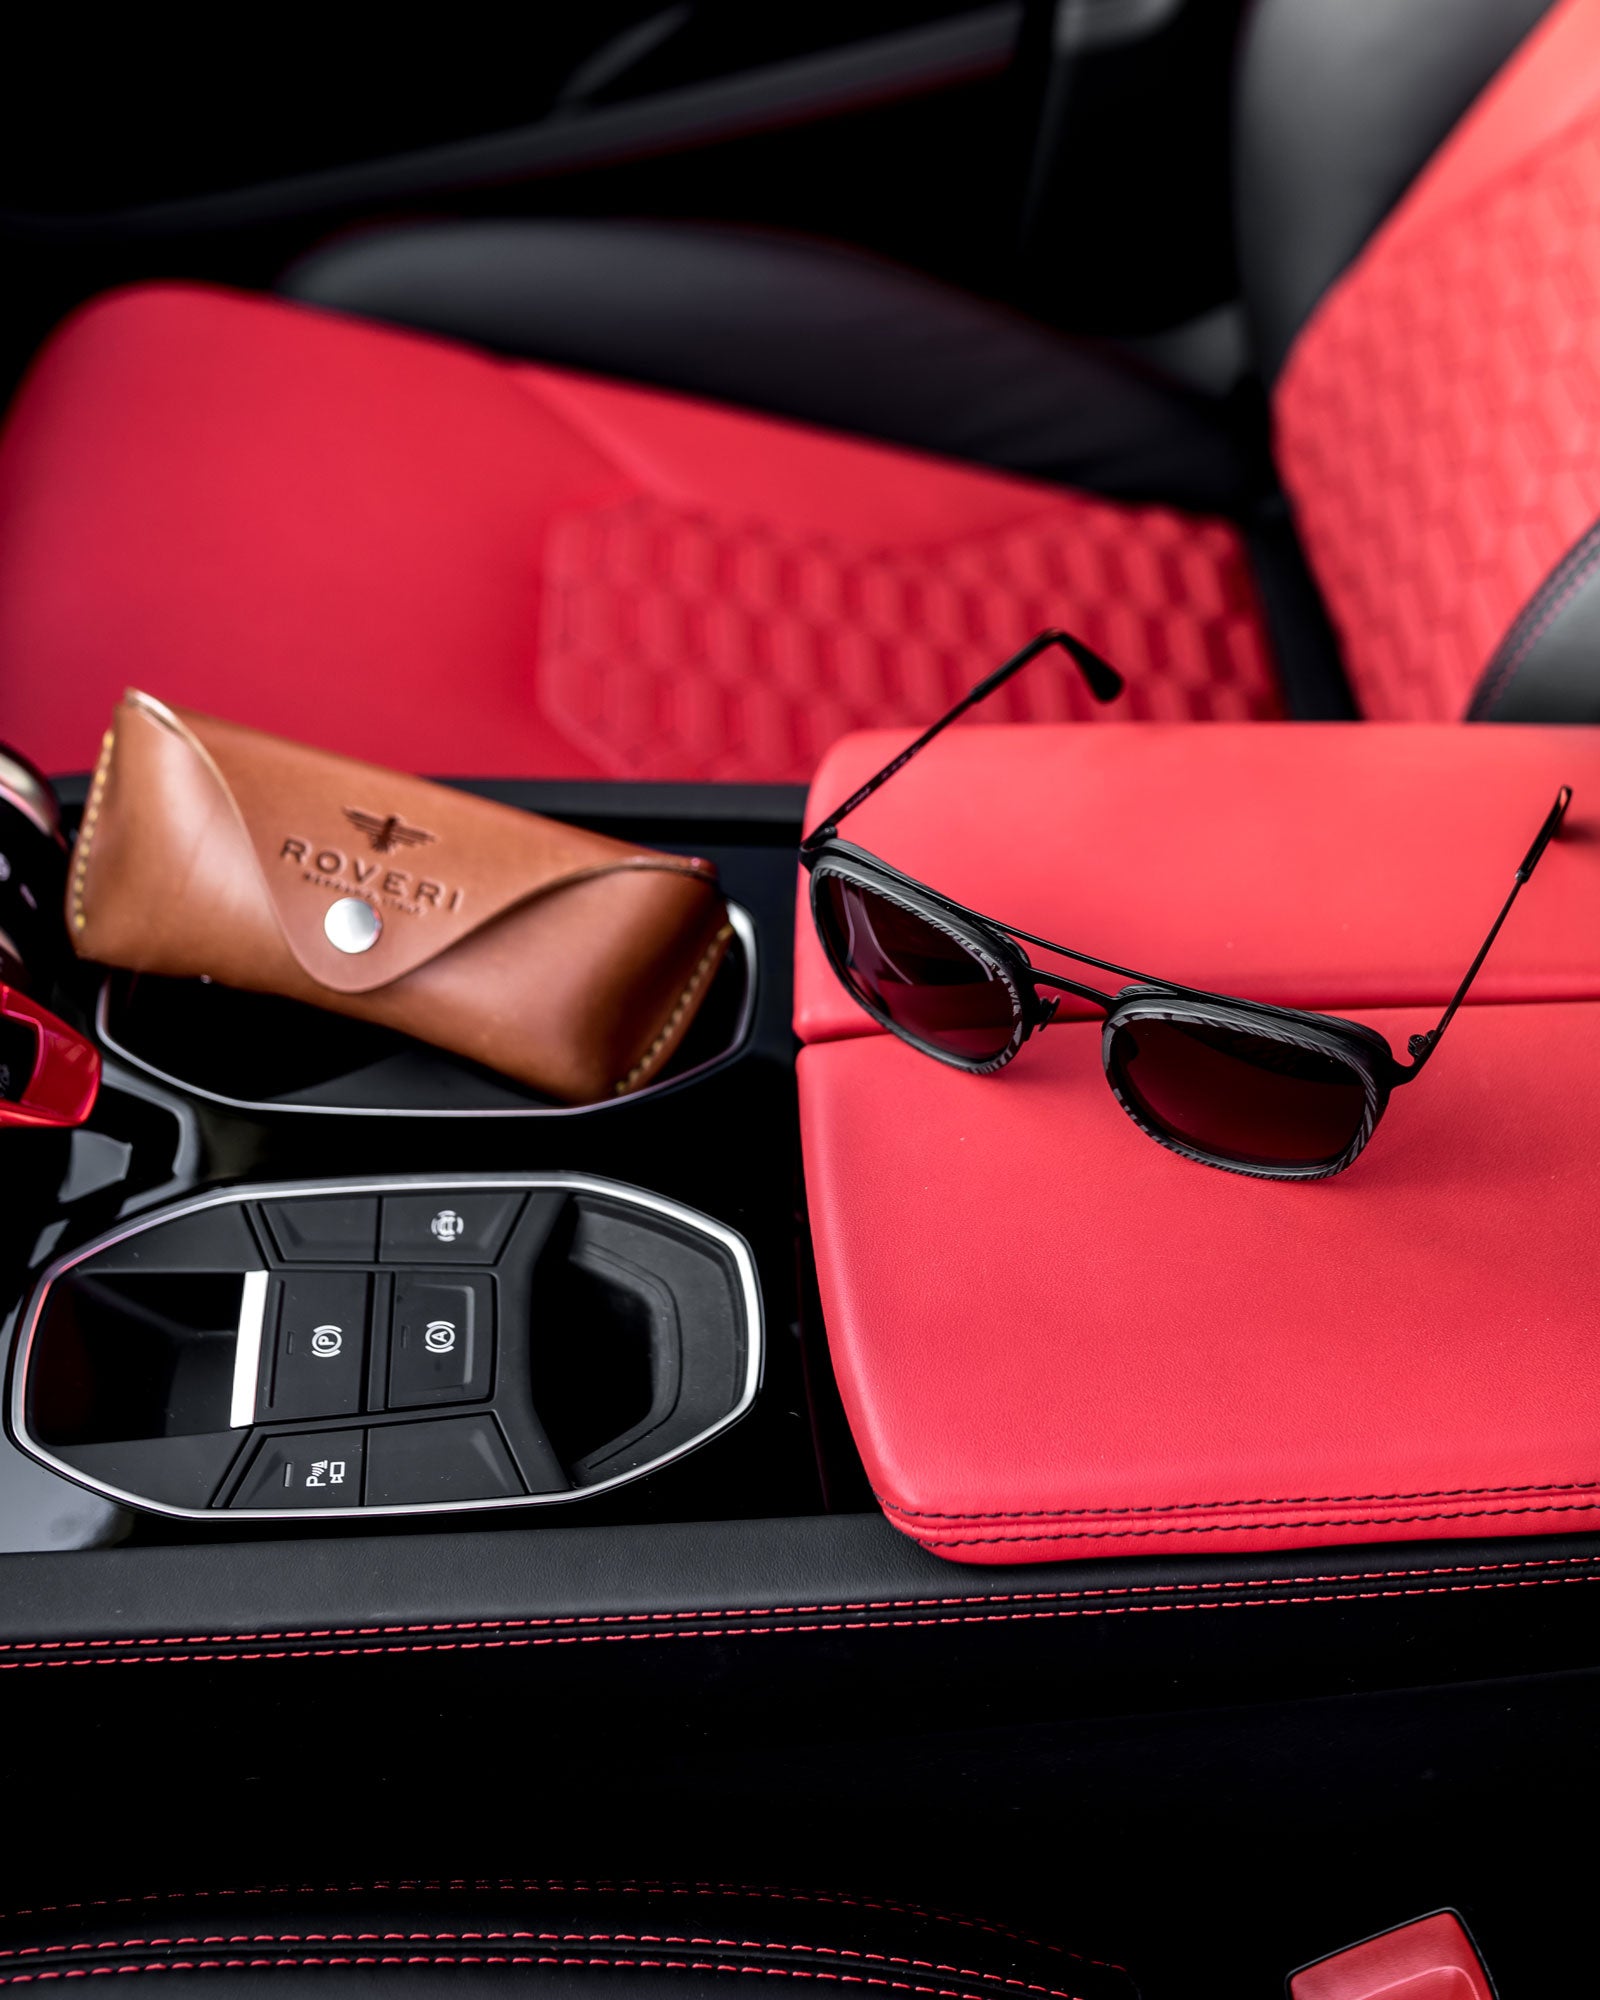 Roveri Eyewear RV018B with Lamborghini Urus Red interiors and leather case.